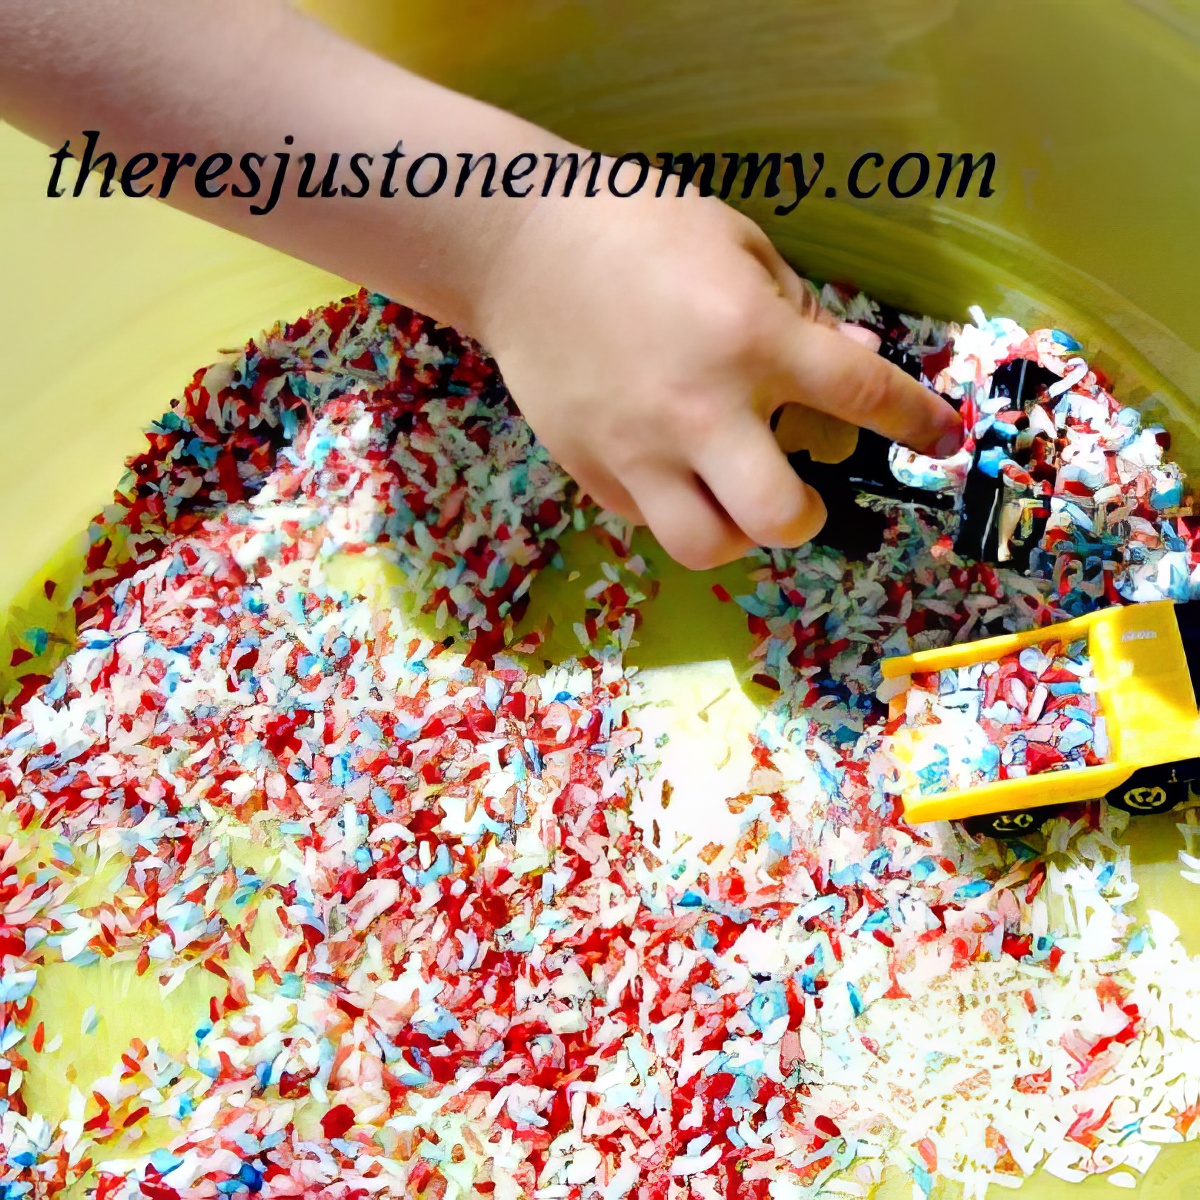 patriotic sensory play using colored rice as sensory bins for preschoolers